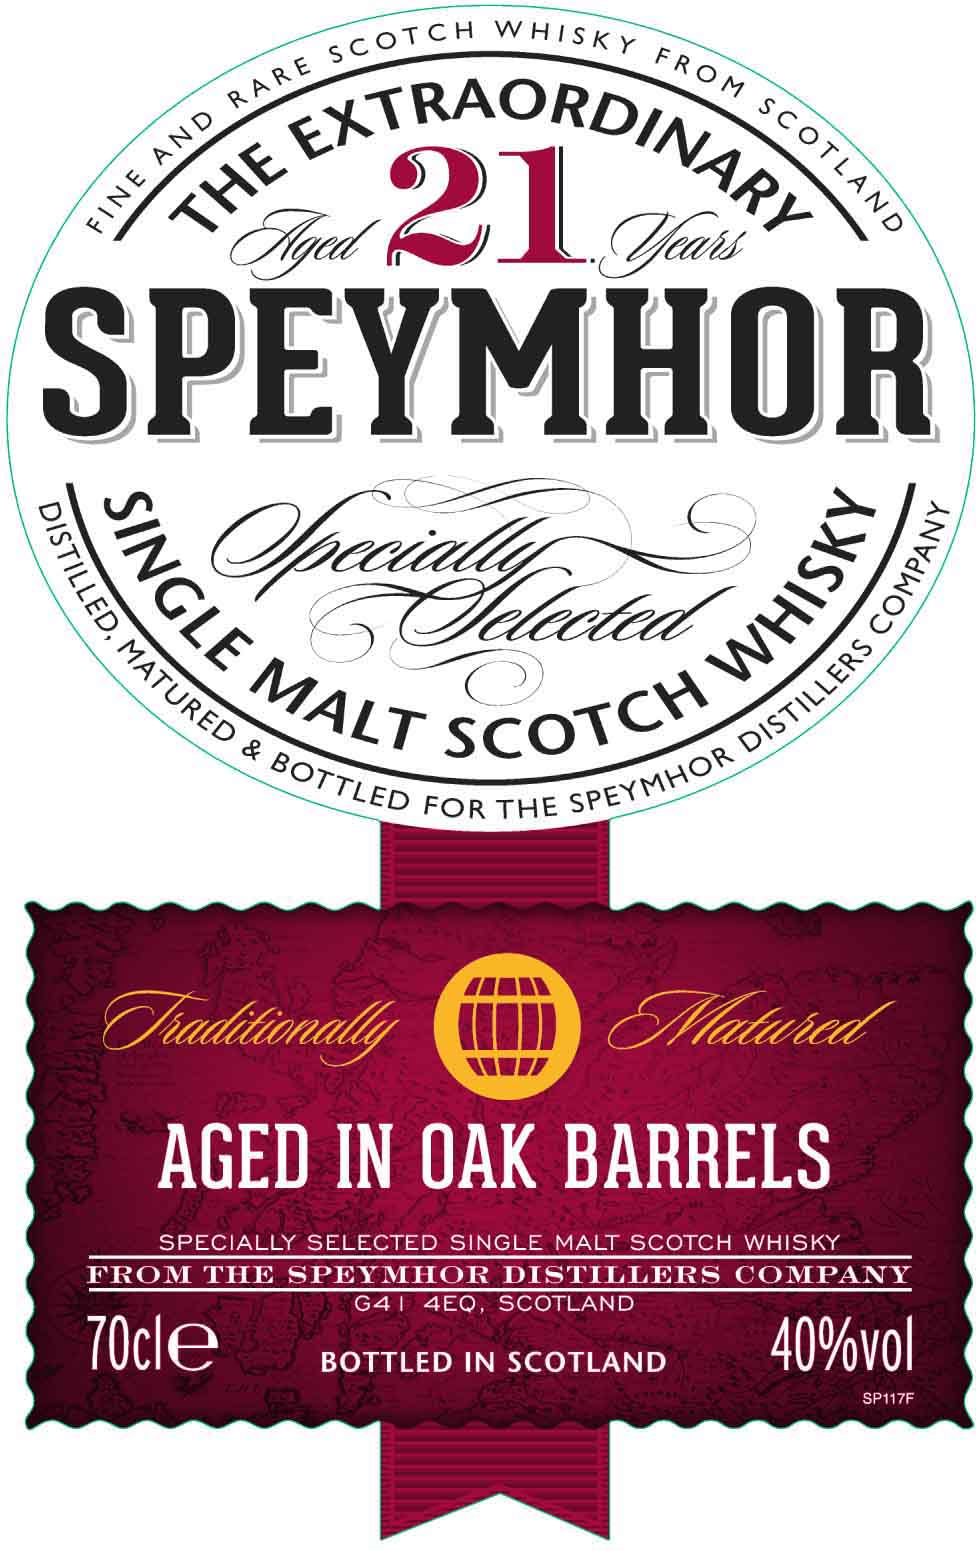 Speymhor - 21 Year Old Single Malt Scotch Whisky label